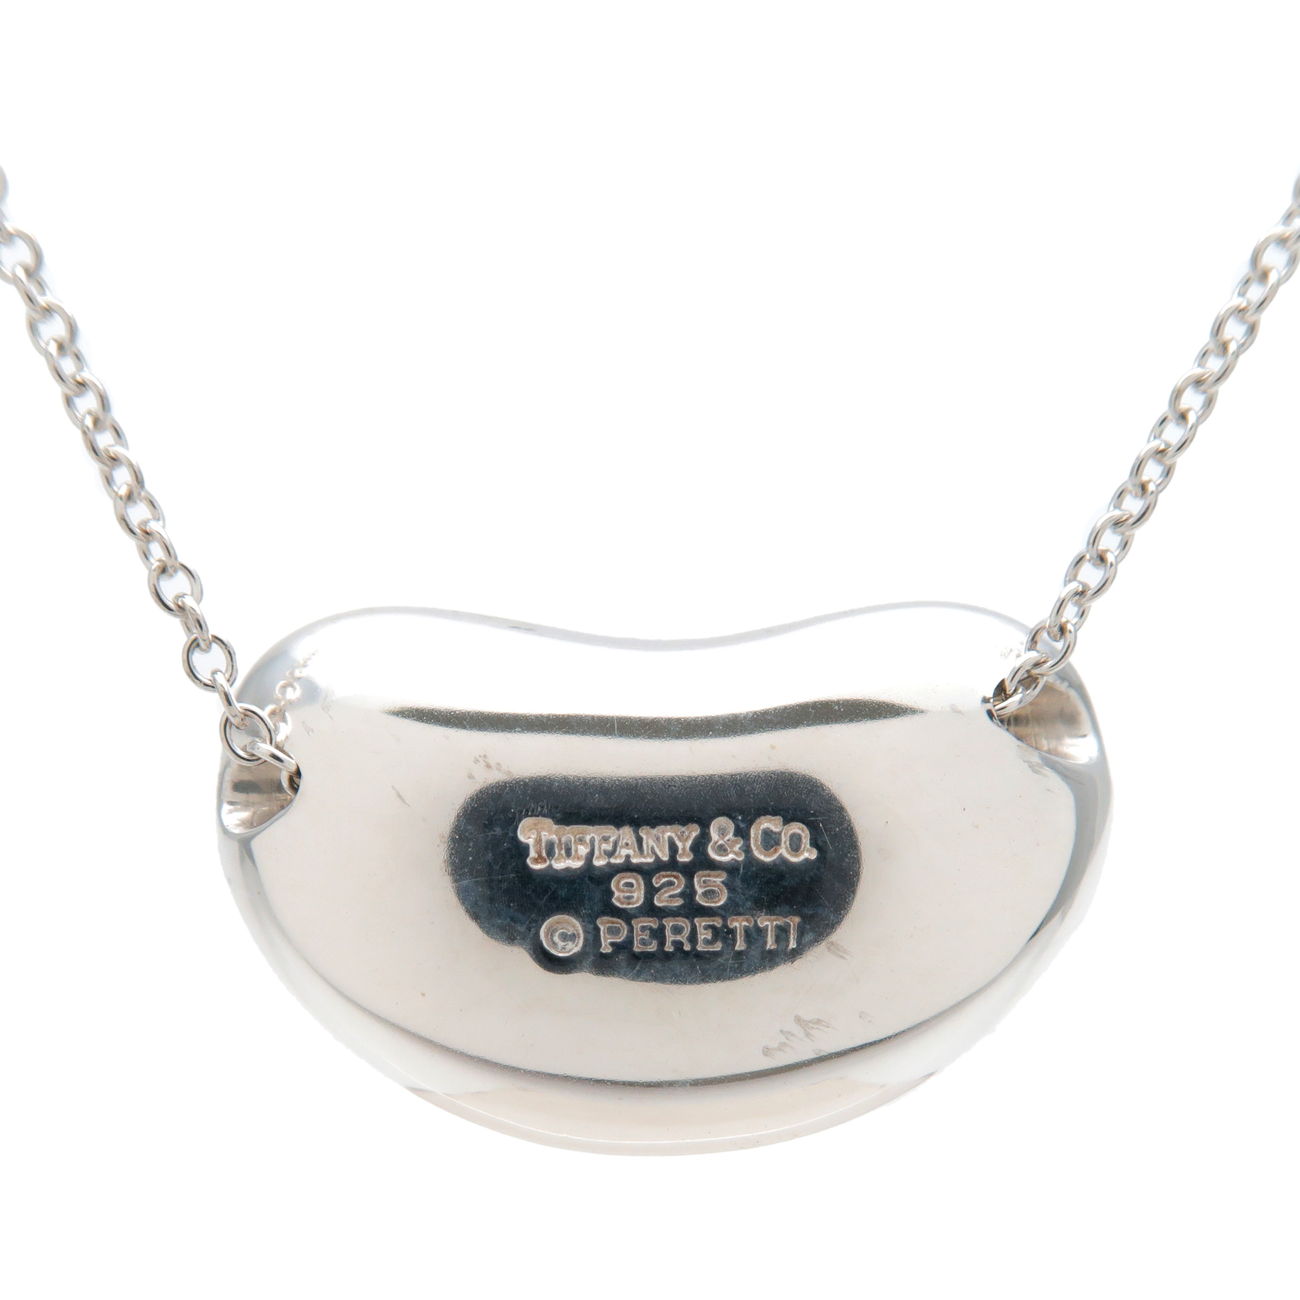 Tiffany&Co. Bean Bean Charm Necklace Medium SV925 Silver